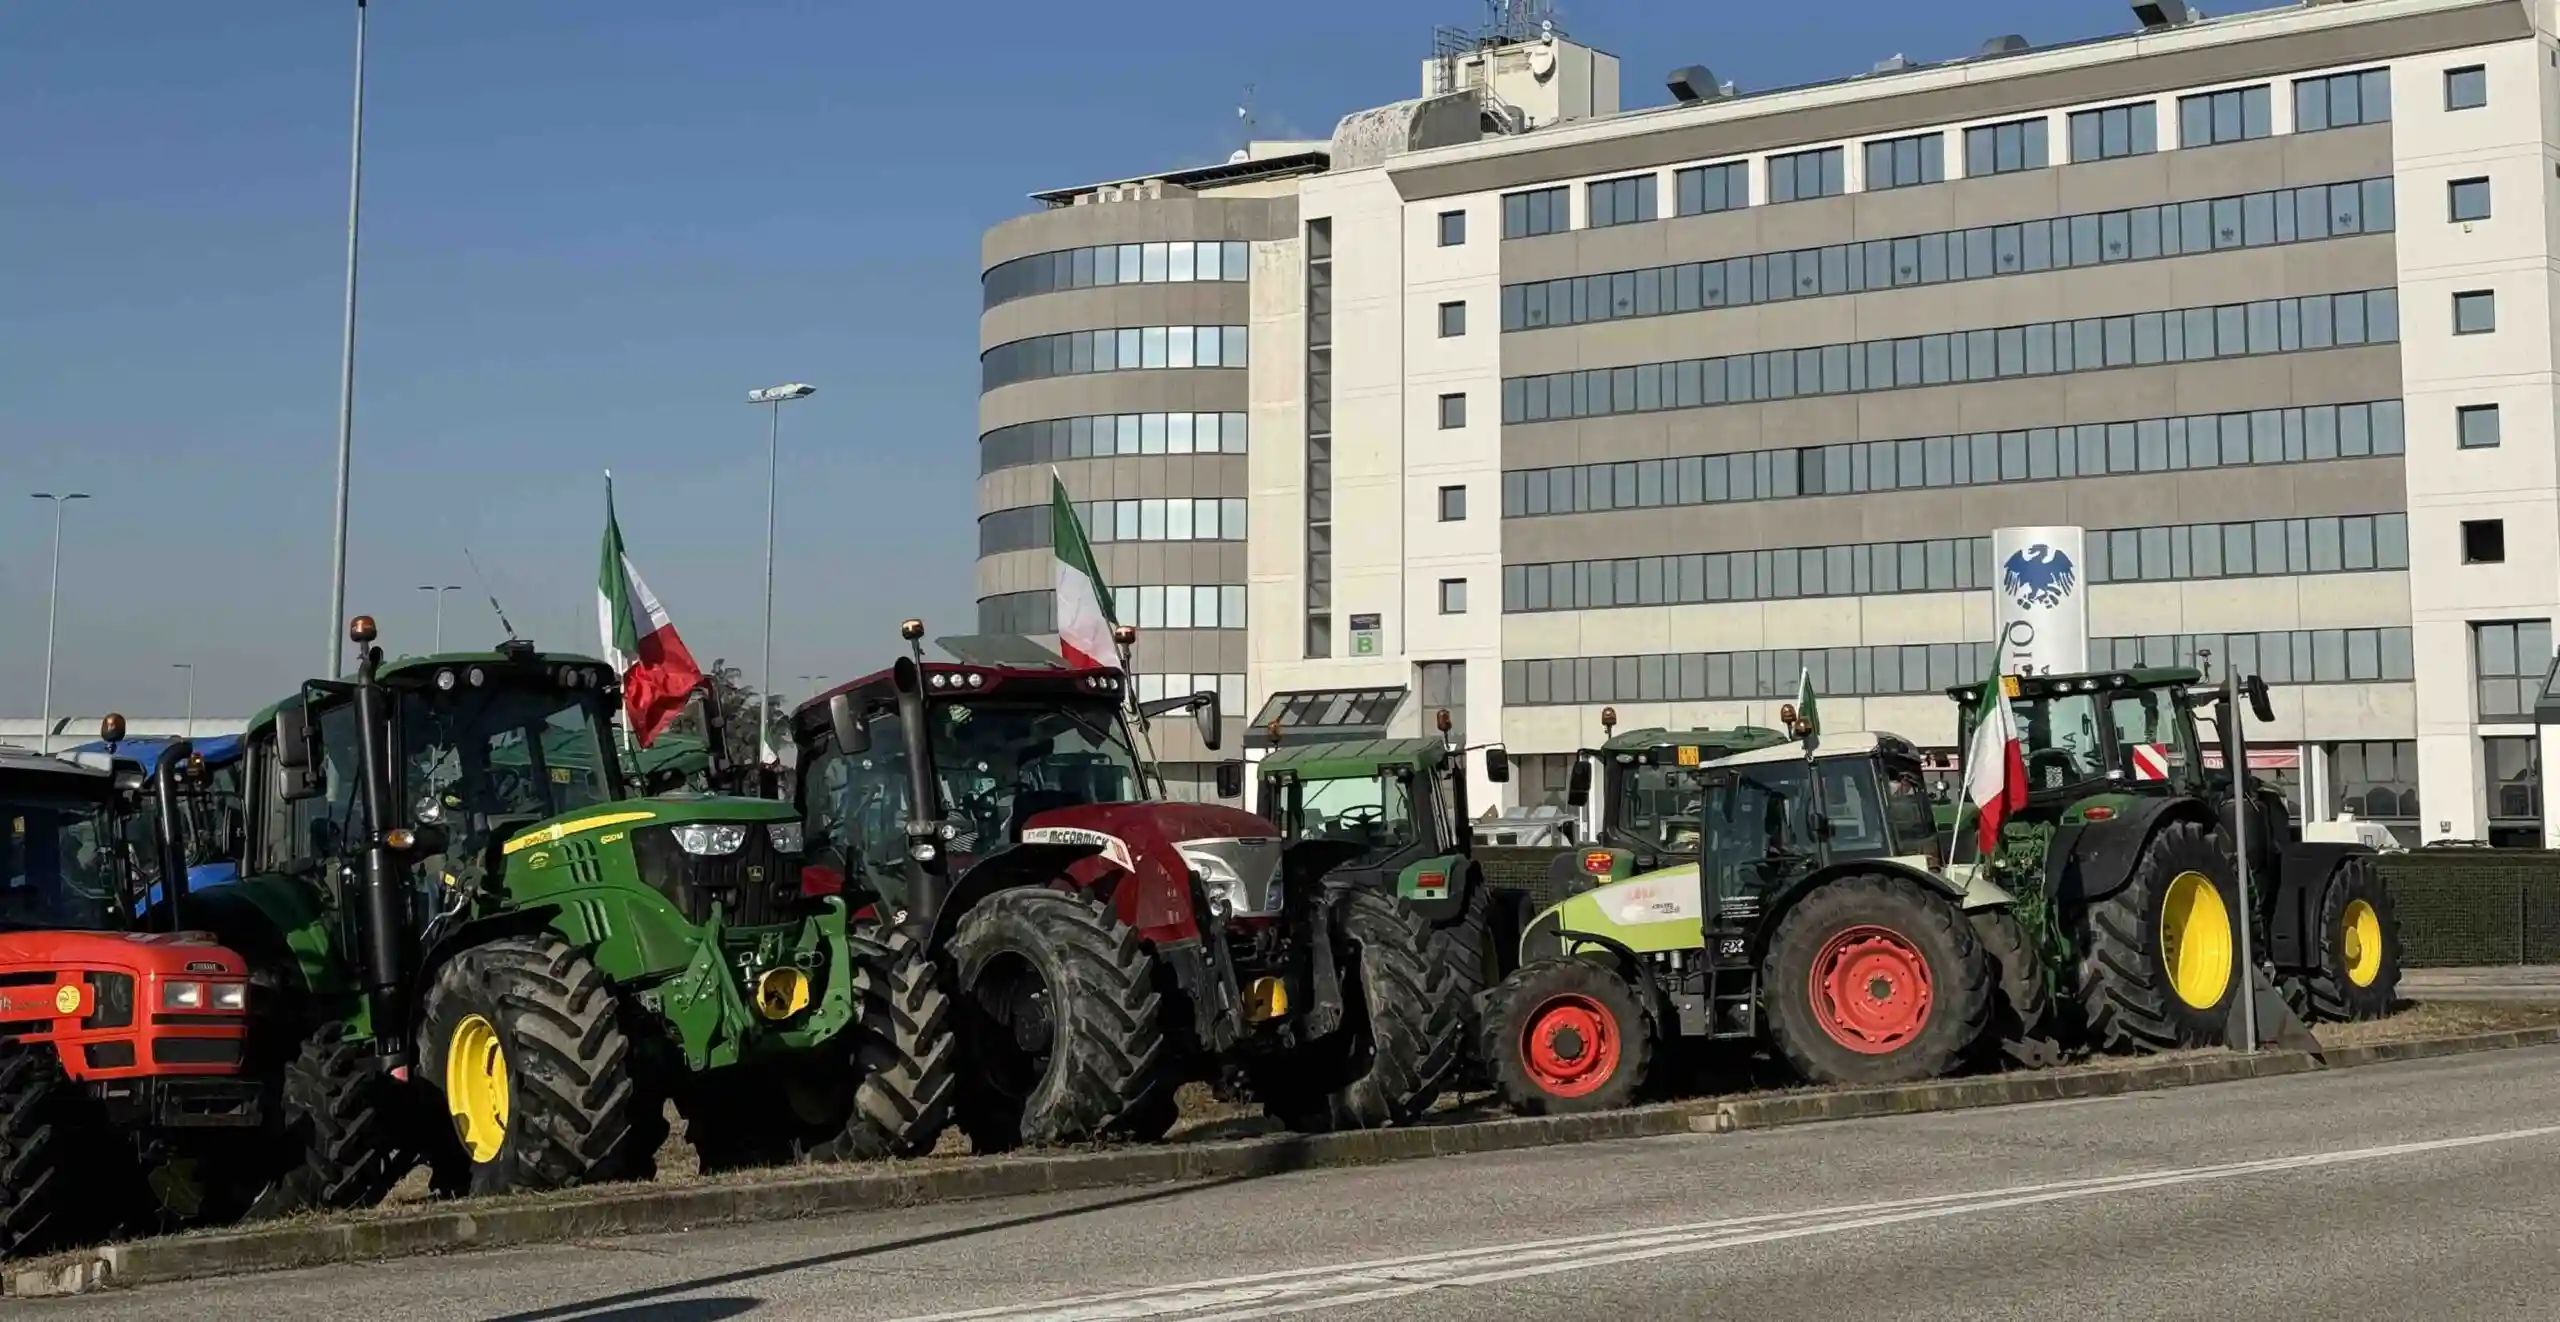 Protesta contadina.Scollamento fra politica e agricoltori